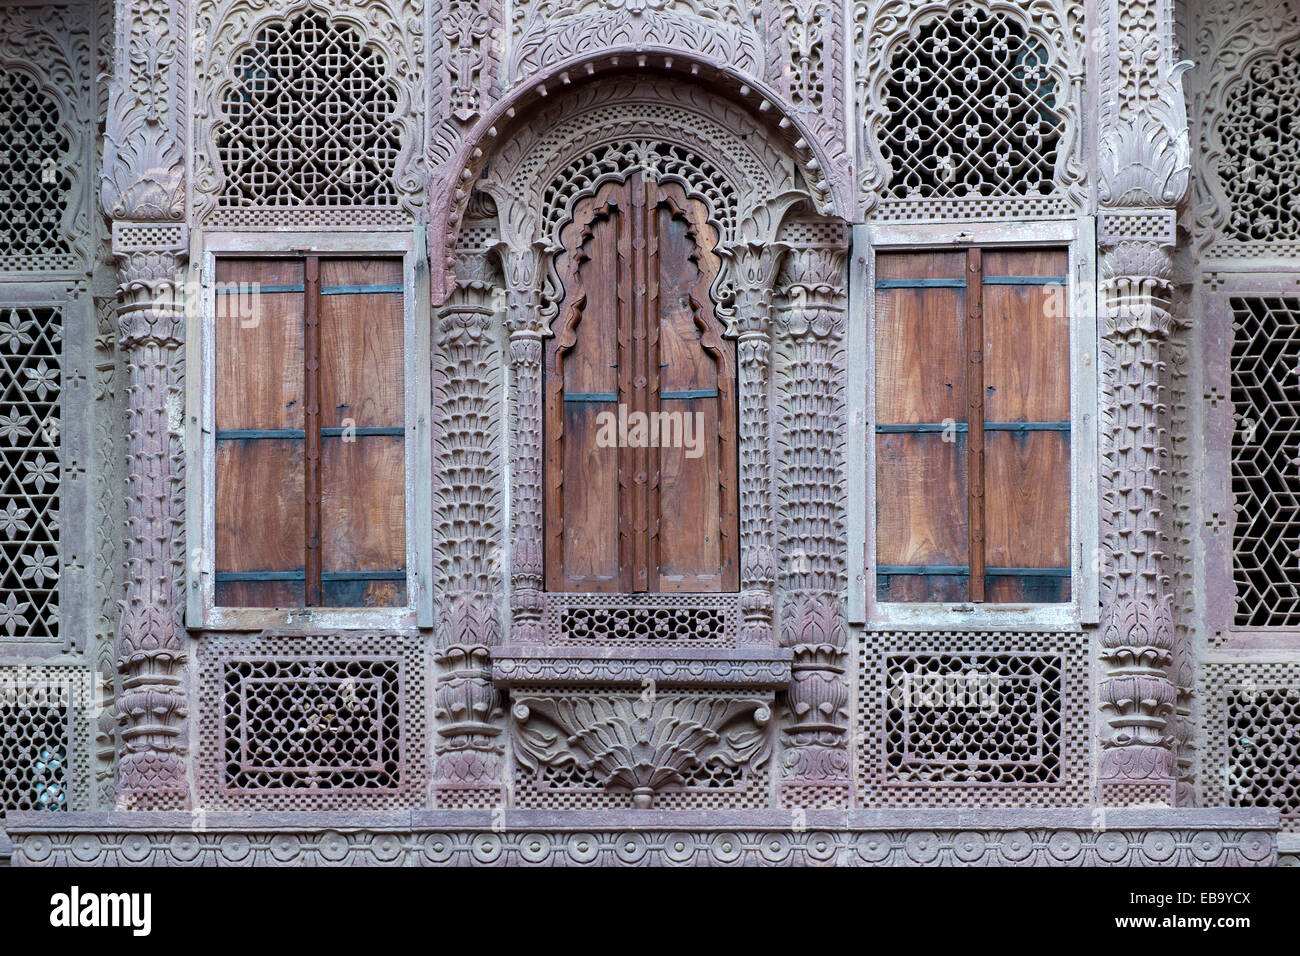 Windows in an ornate sandstone facade, Mehrangarh Fort, Jodhpur, Rajasthan, India Stock Photo